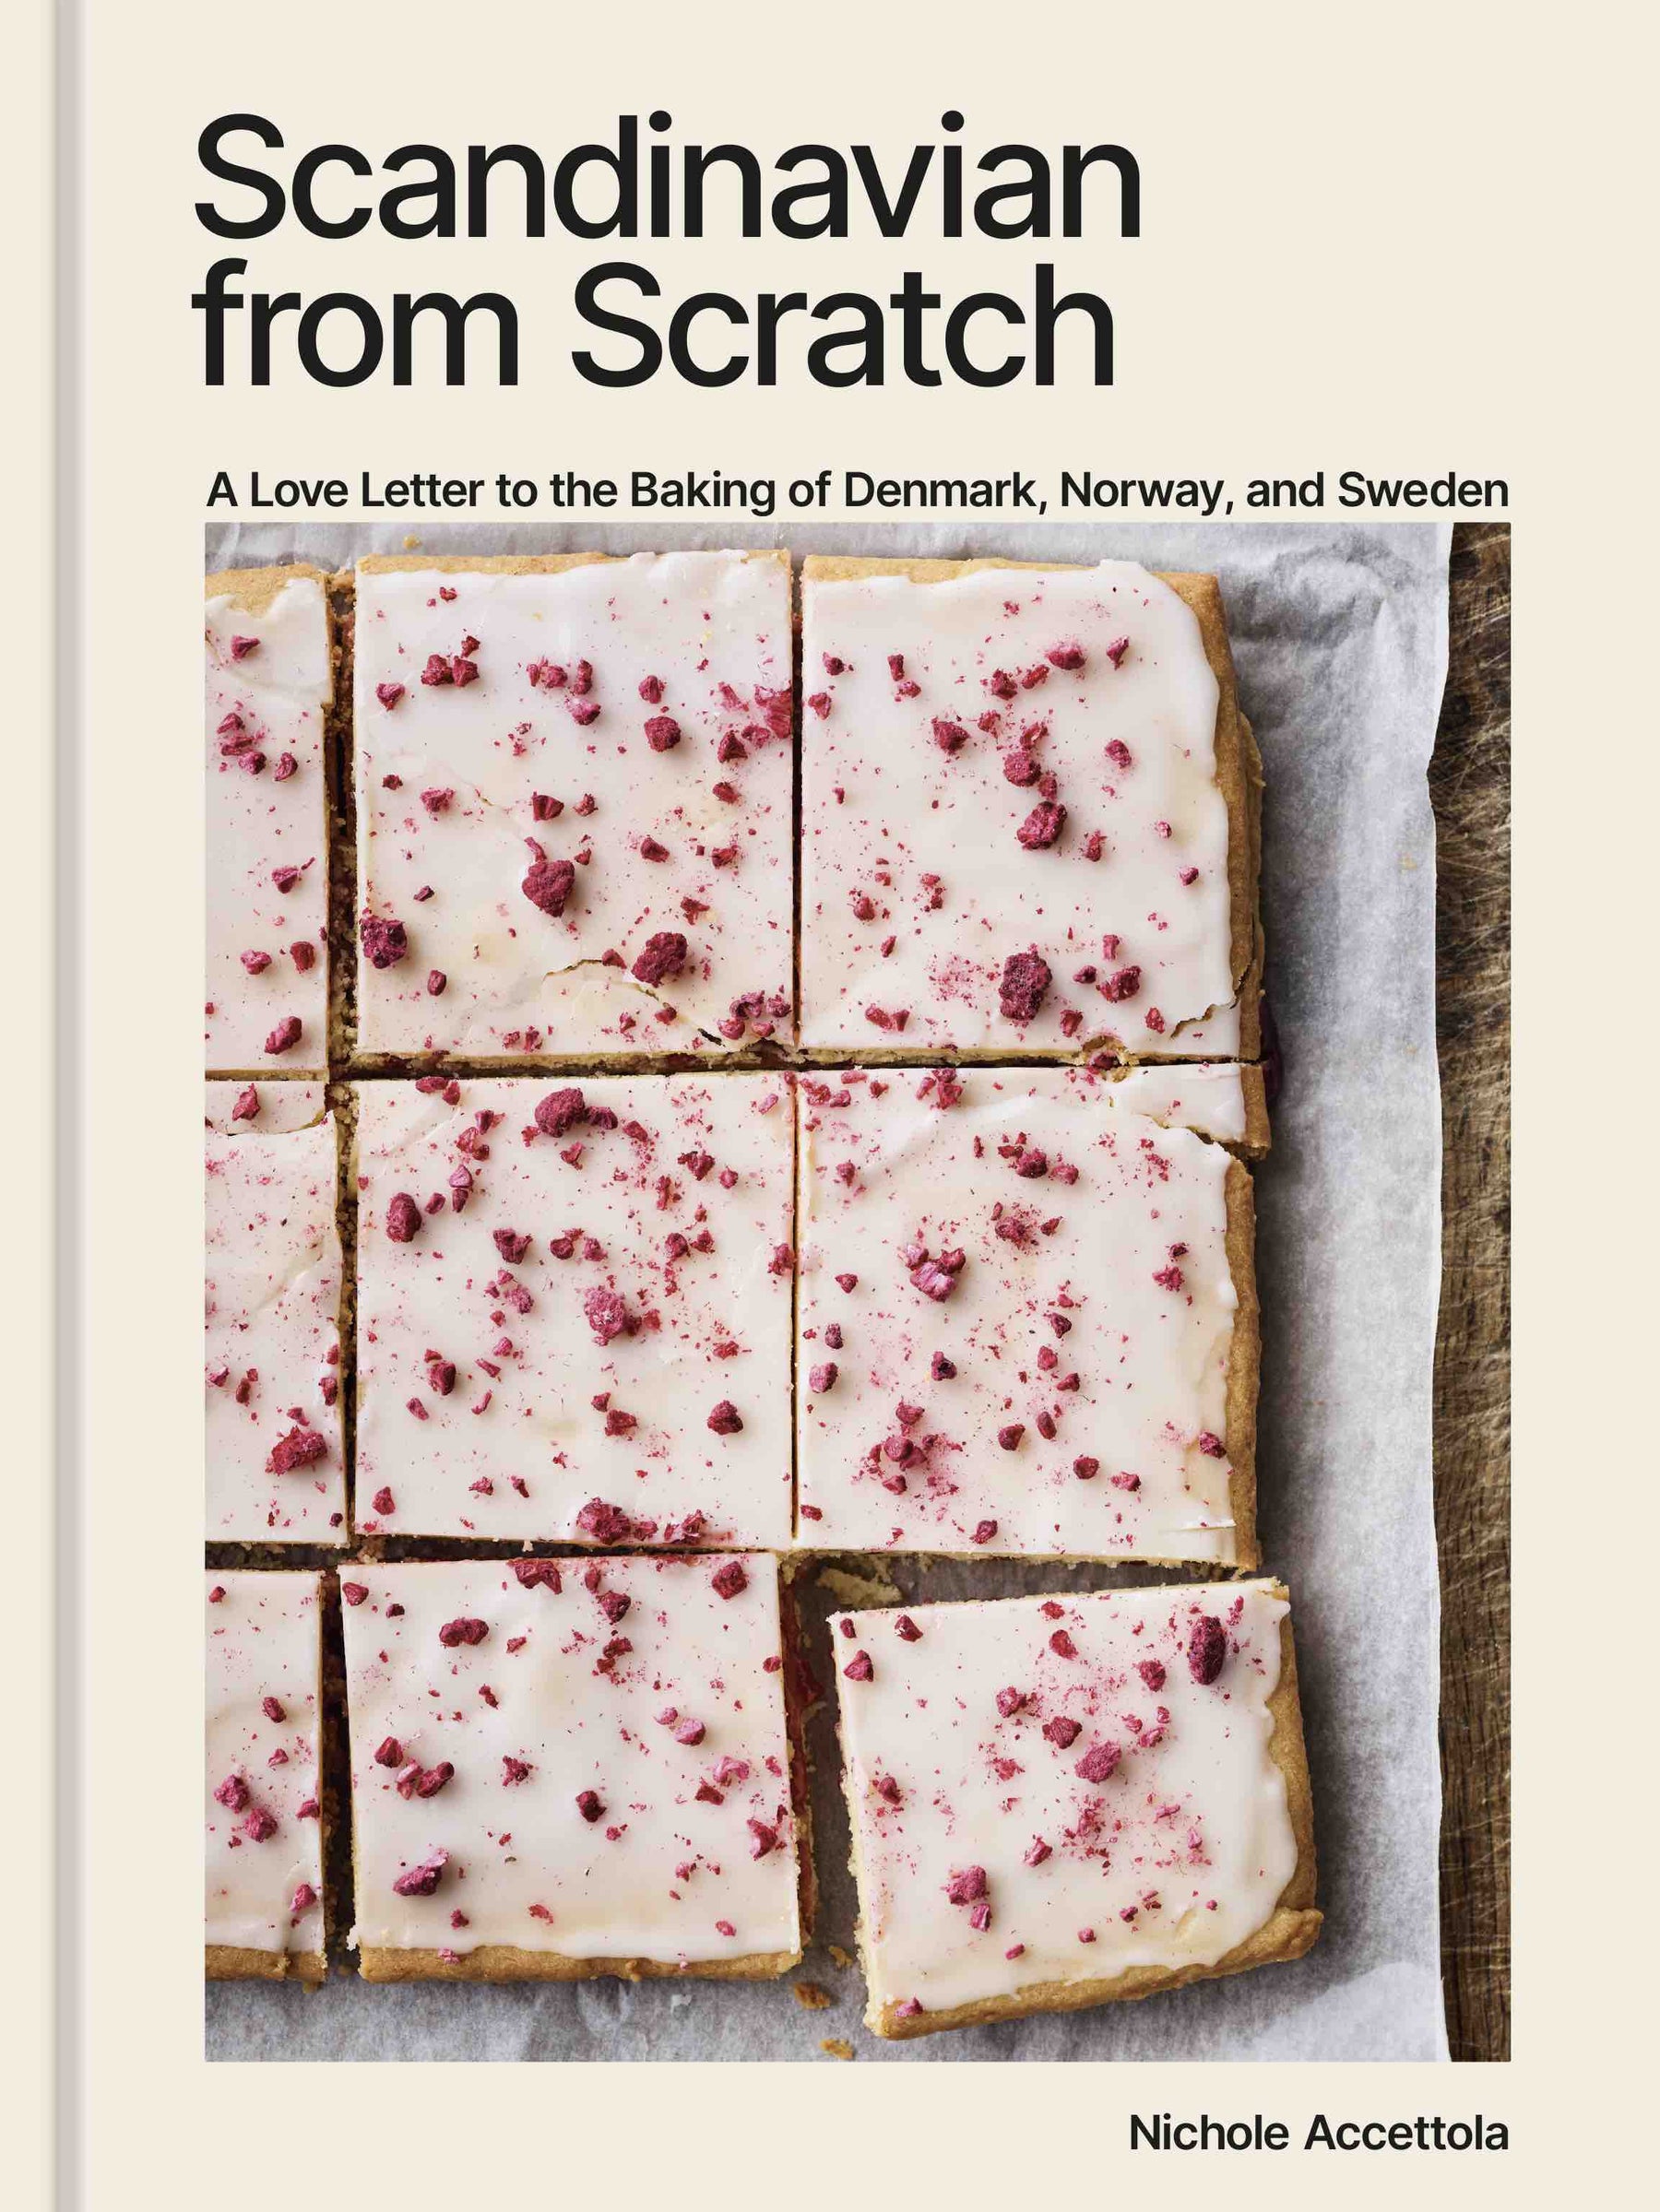 Scandinavian from Scratch | by Nichole Accettola - Random House - Bluecashew Kitchen Homestead